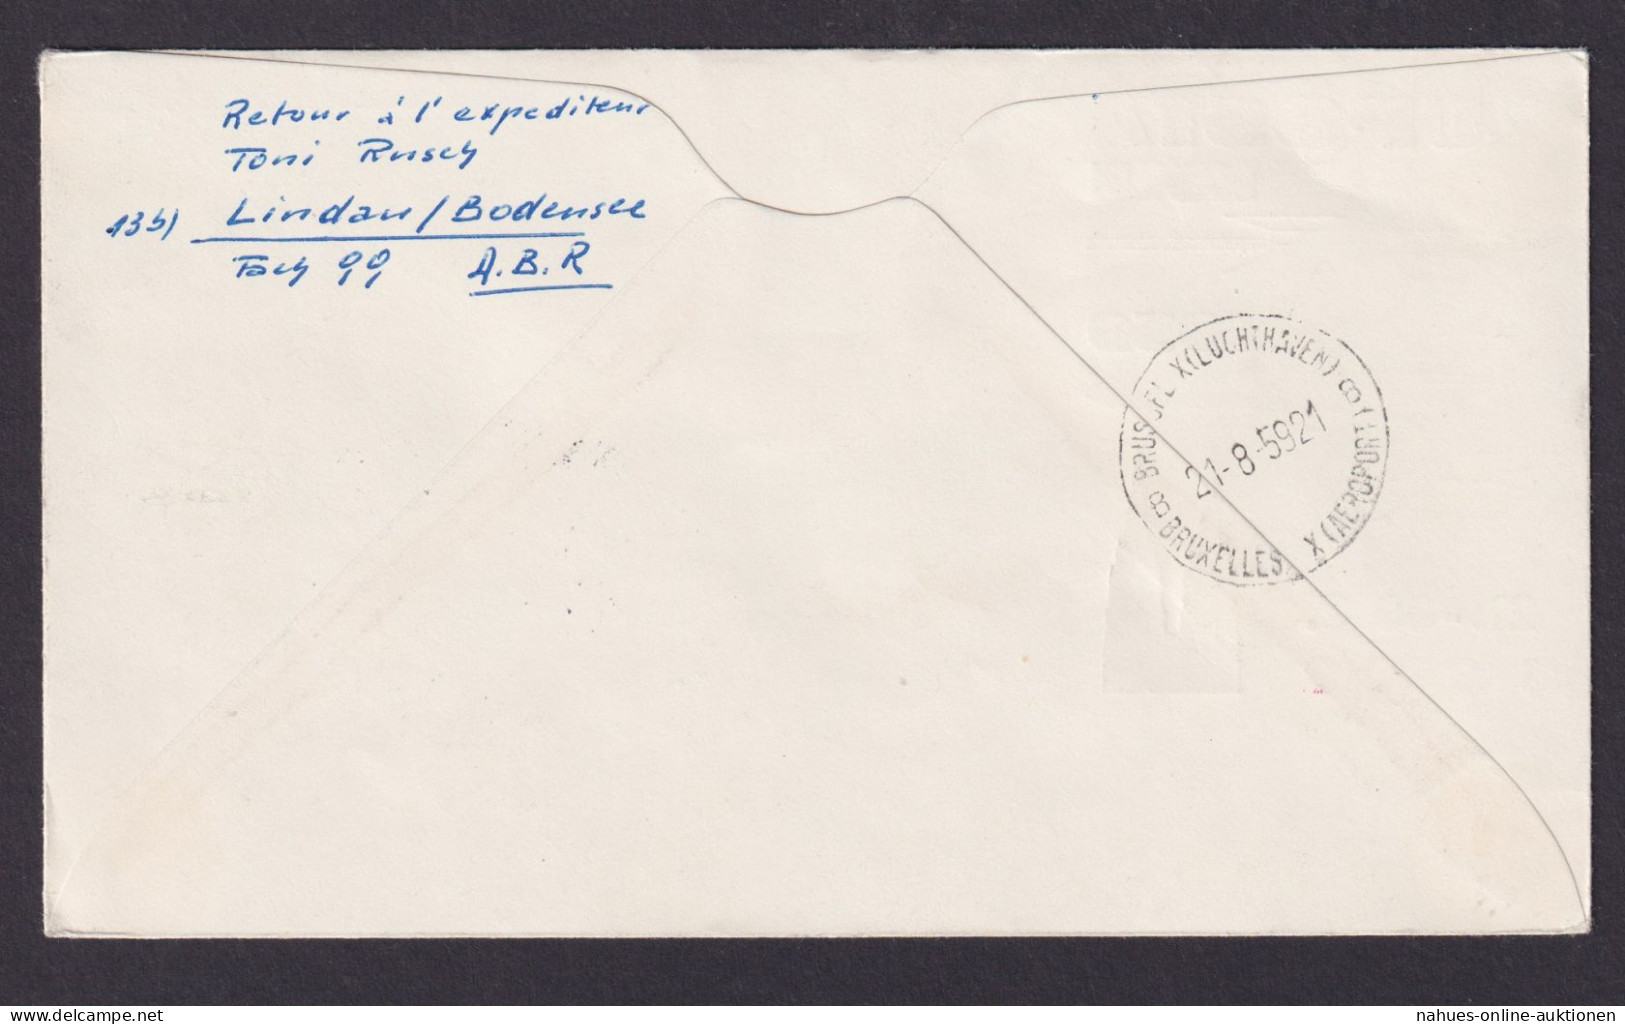 Flugpost Brief Sabena Düsseldorf Brüssel Belgien Luposta Philatelie Bund Heuss - Storia Postale